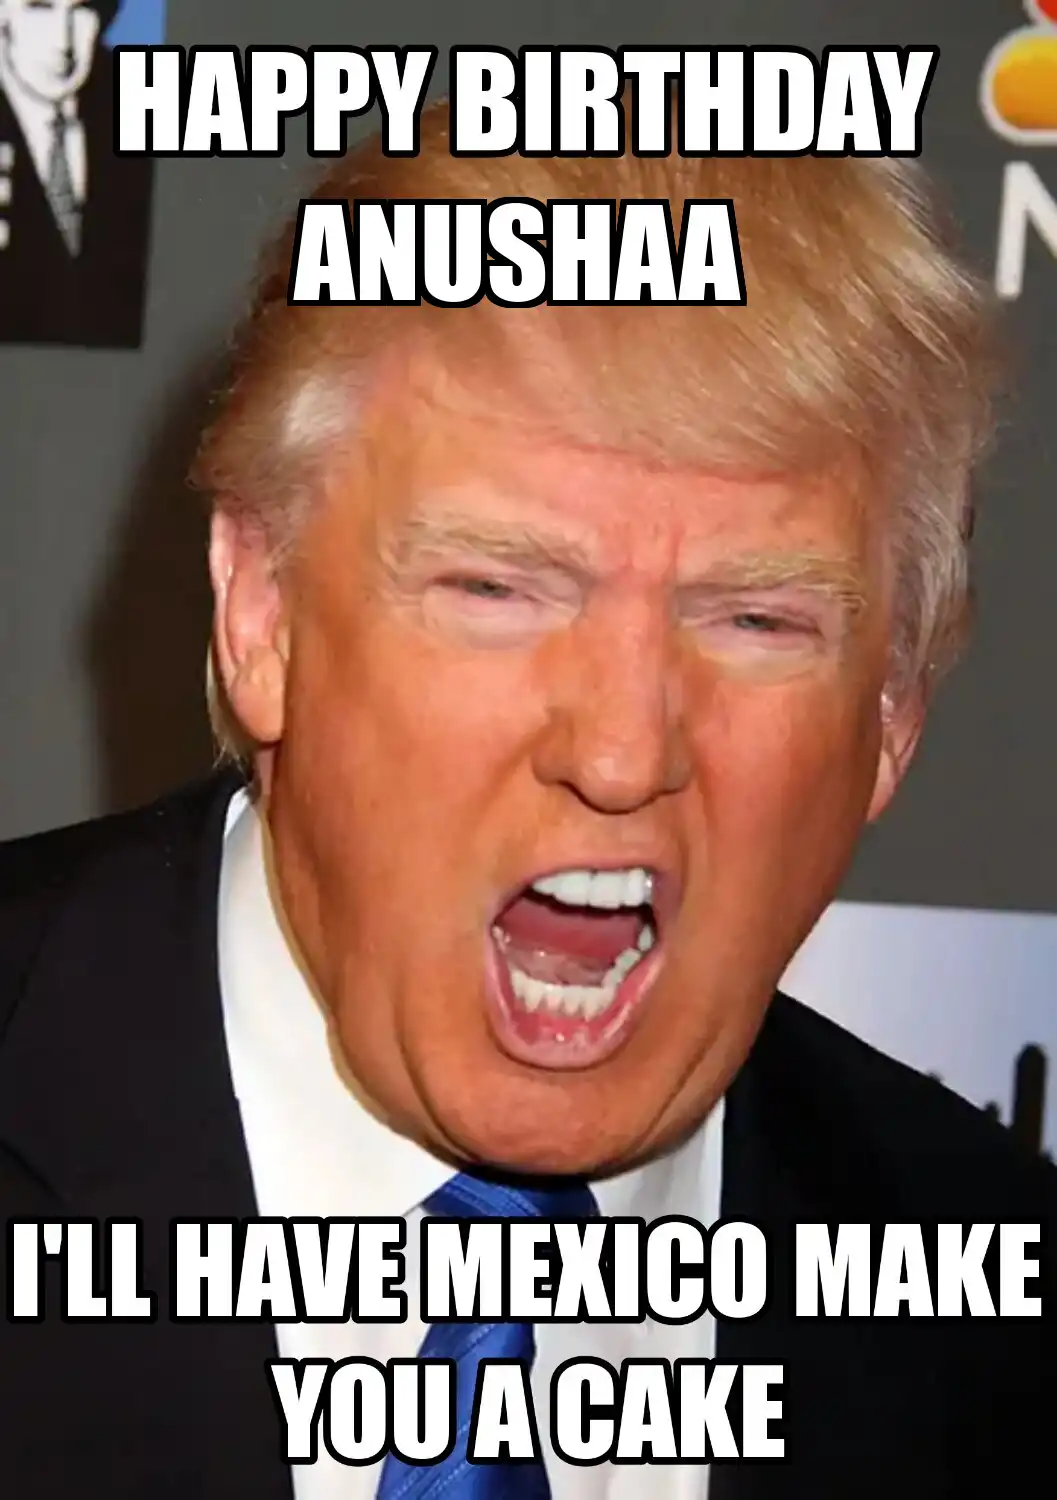 Happy Birthday Anushaa Mexico Make You A Cake Meme